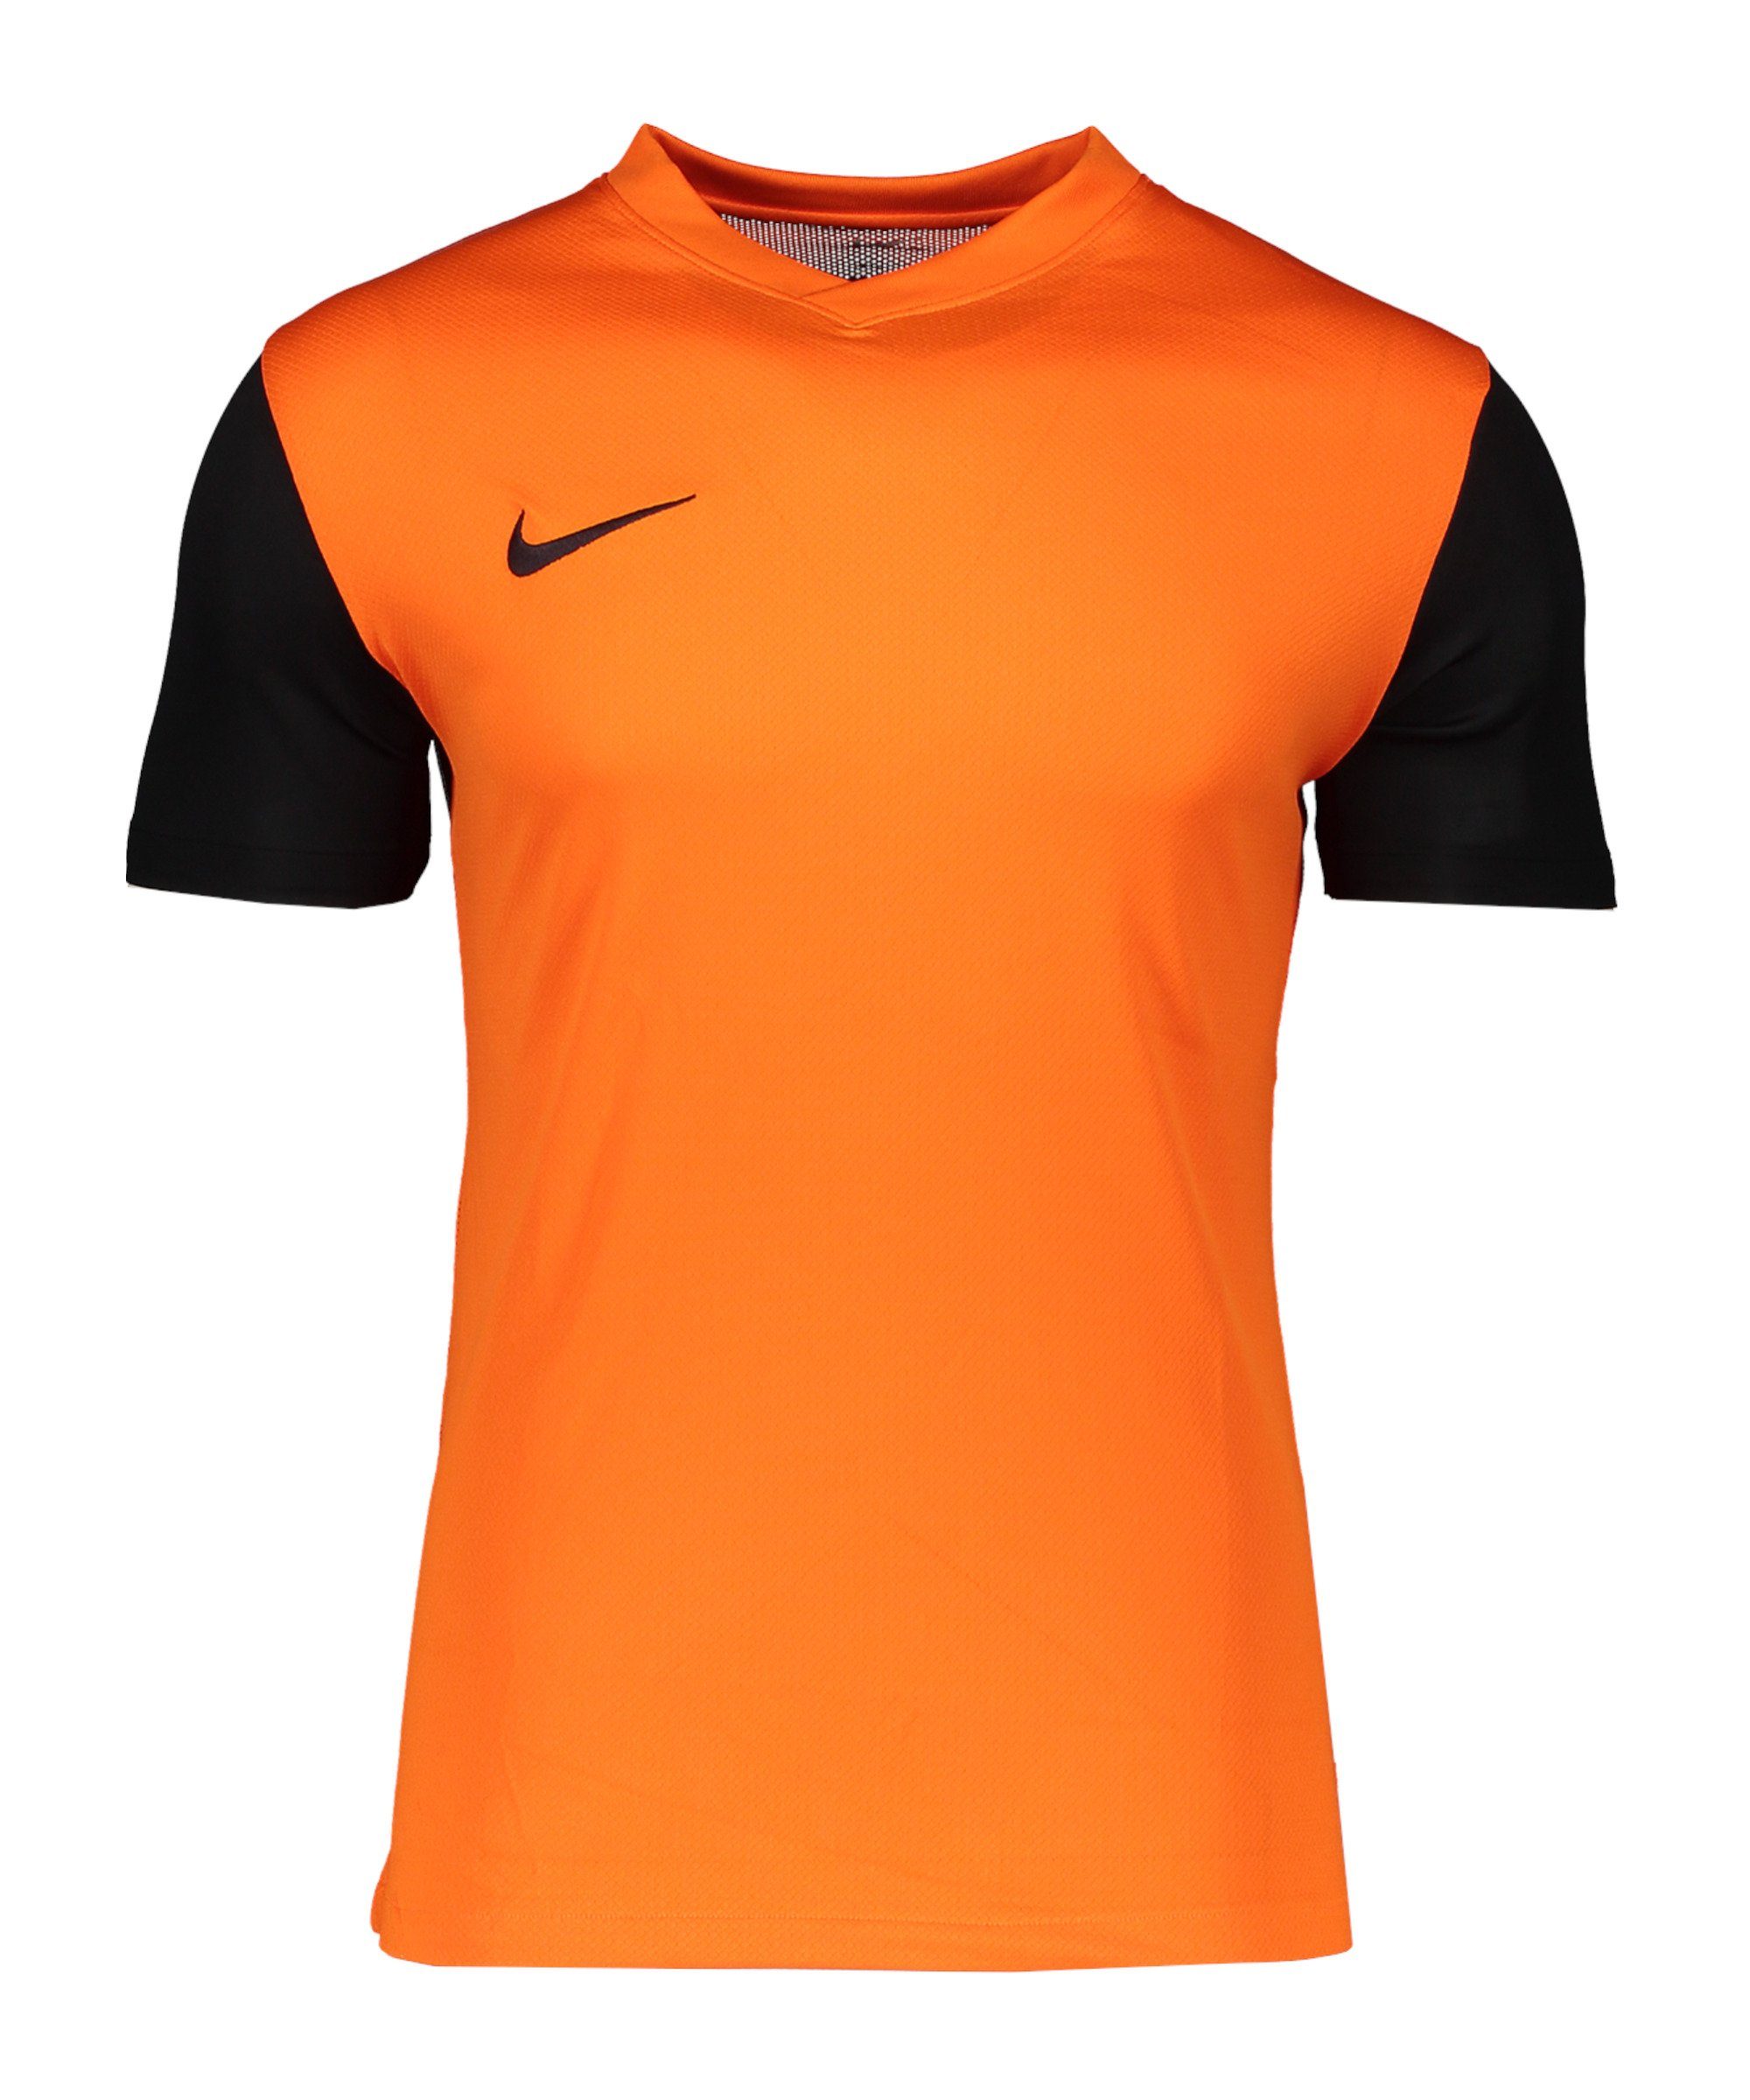 Fußballtrikot Premier Tiempo II orangeschwarz Trikot Kids Nike